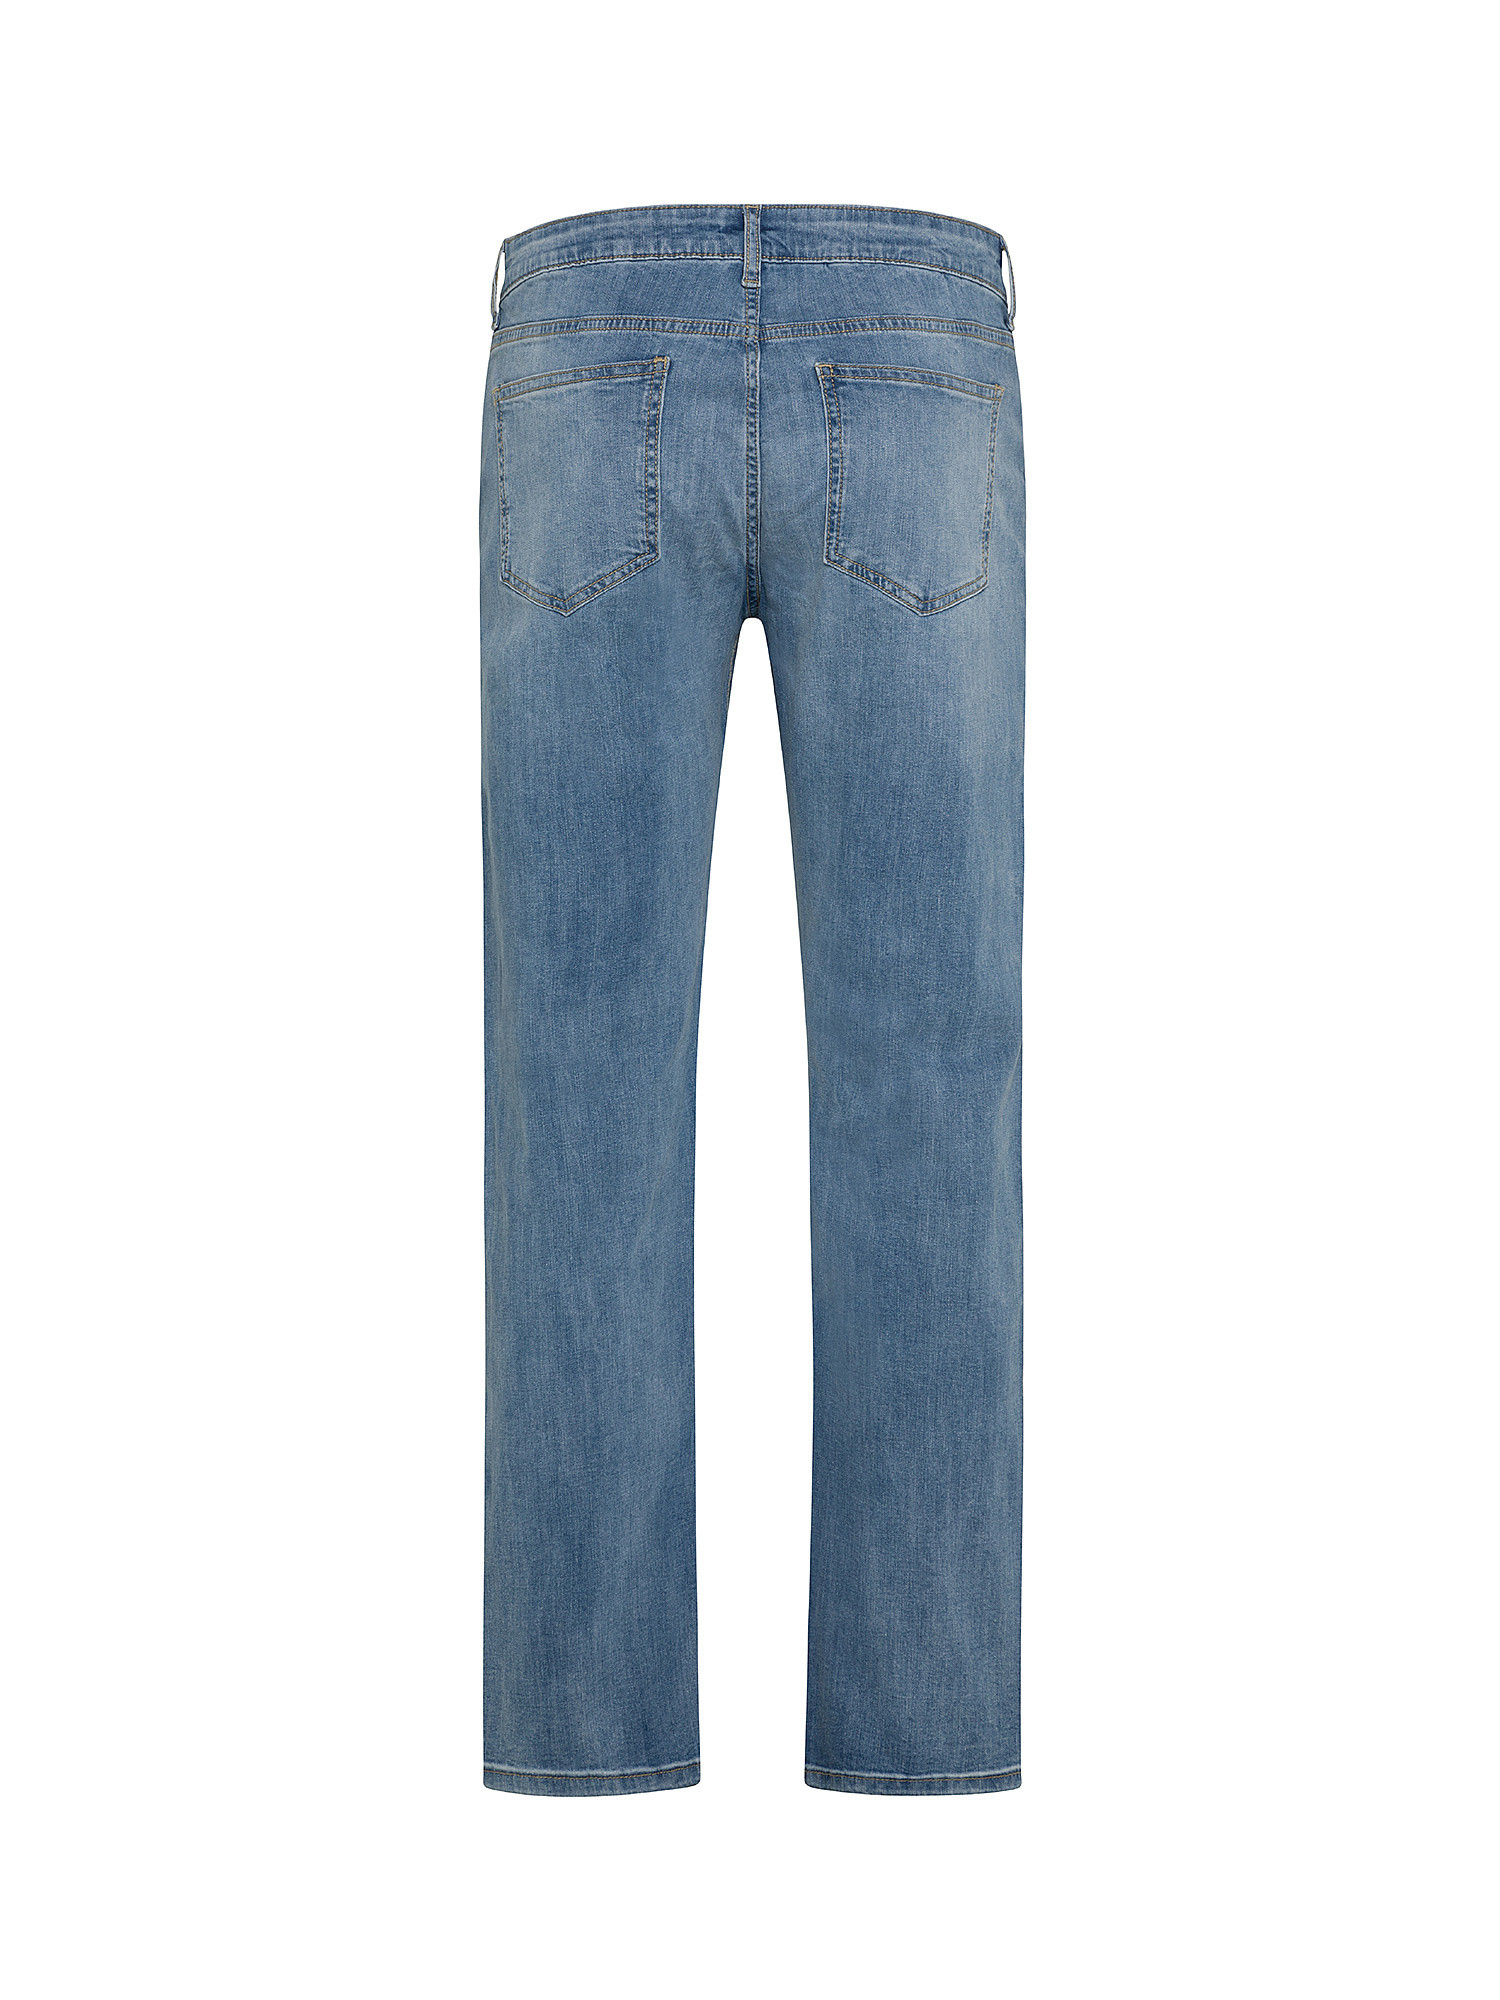 JCT - Jeans cinque tasche, Blu, large image number 1